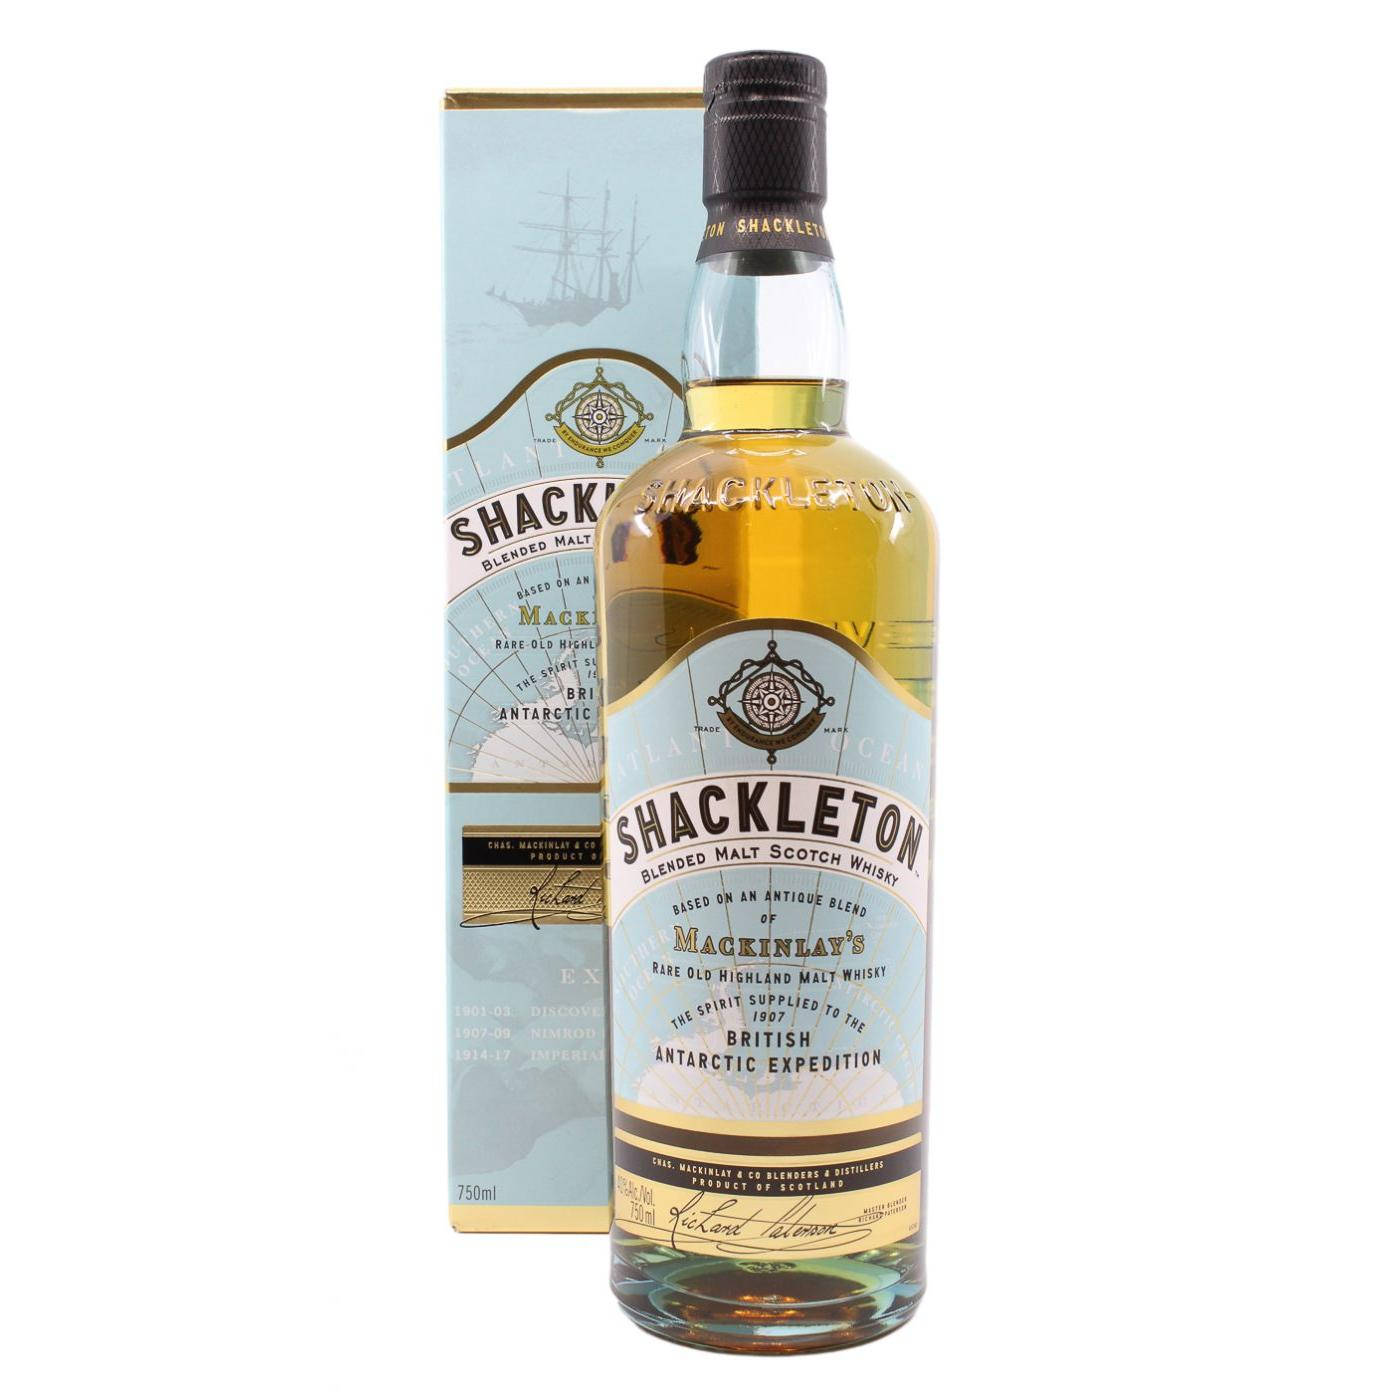 Shackleton Scotch Whisky Bottle And Box Wallpaper